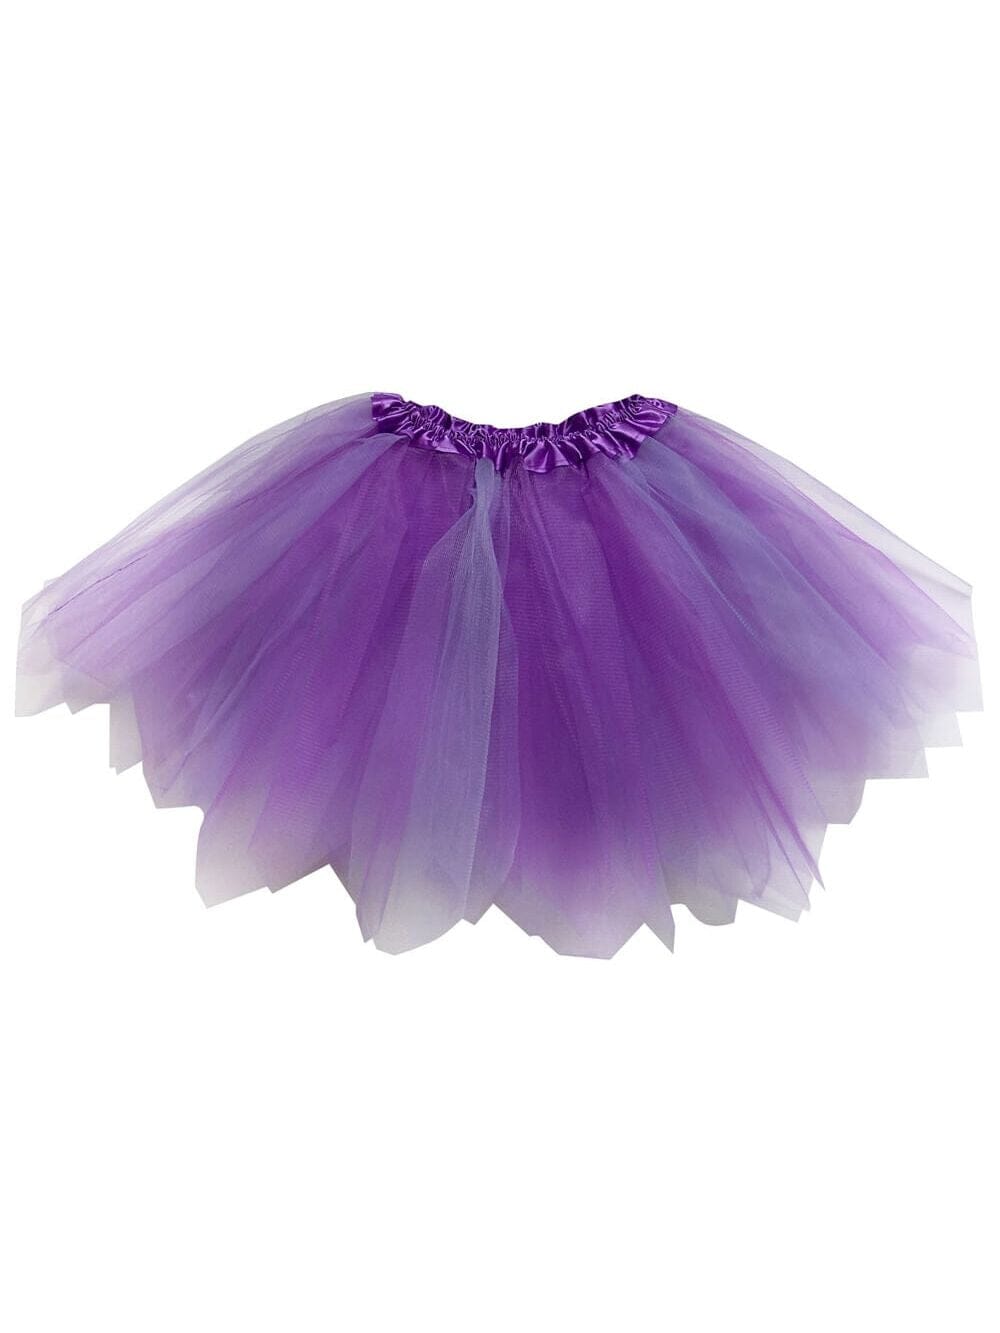 Fairy Costume Pixie Lavender Purple Tutu Skirt, Ships Fast